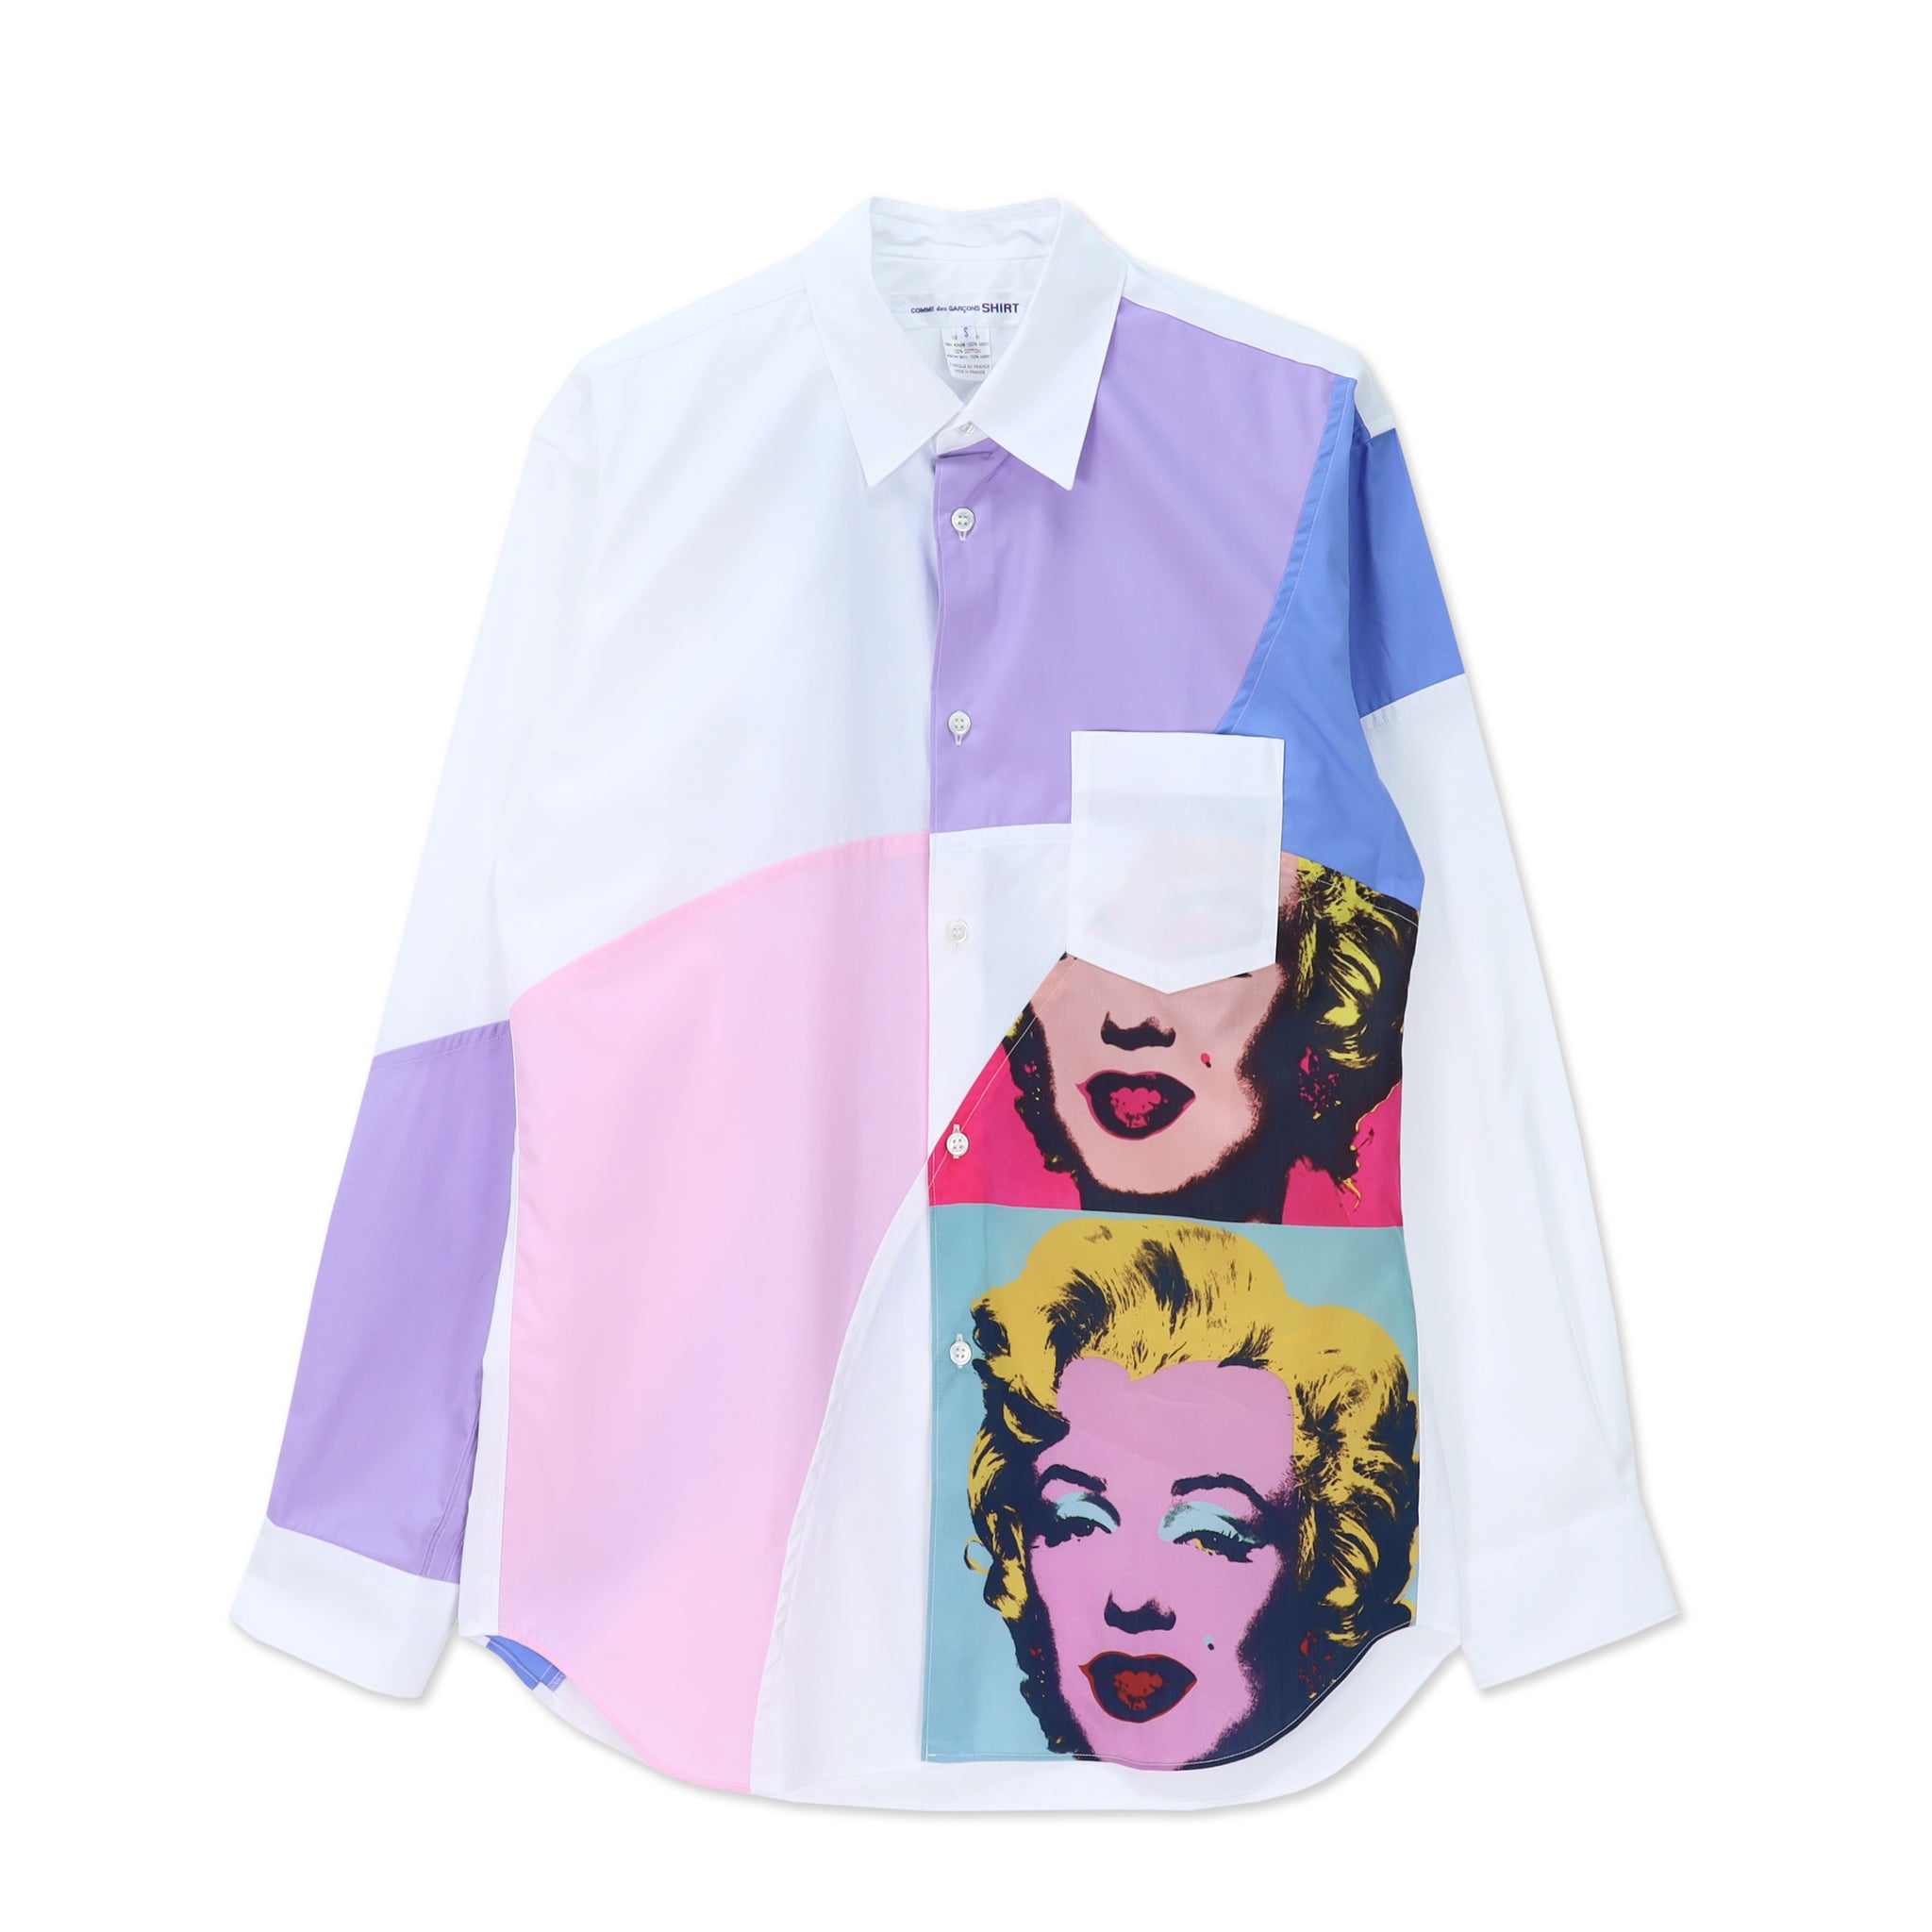 Andy Warhol Marilyn Monroe Shirt